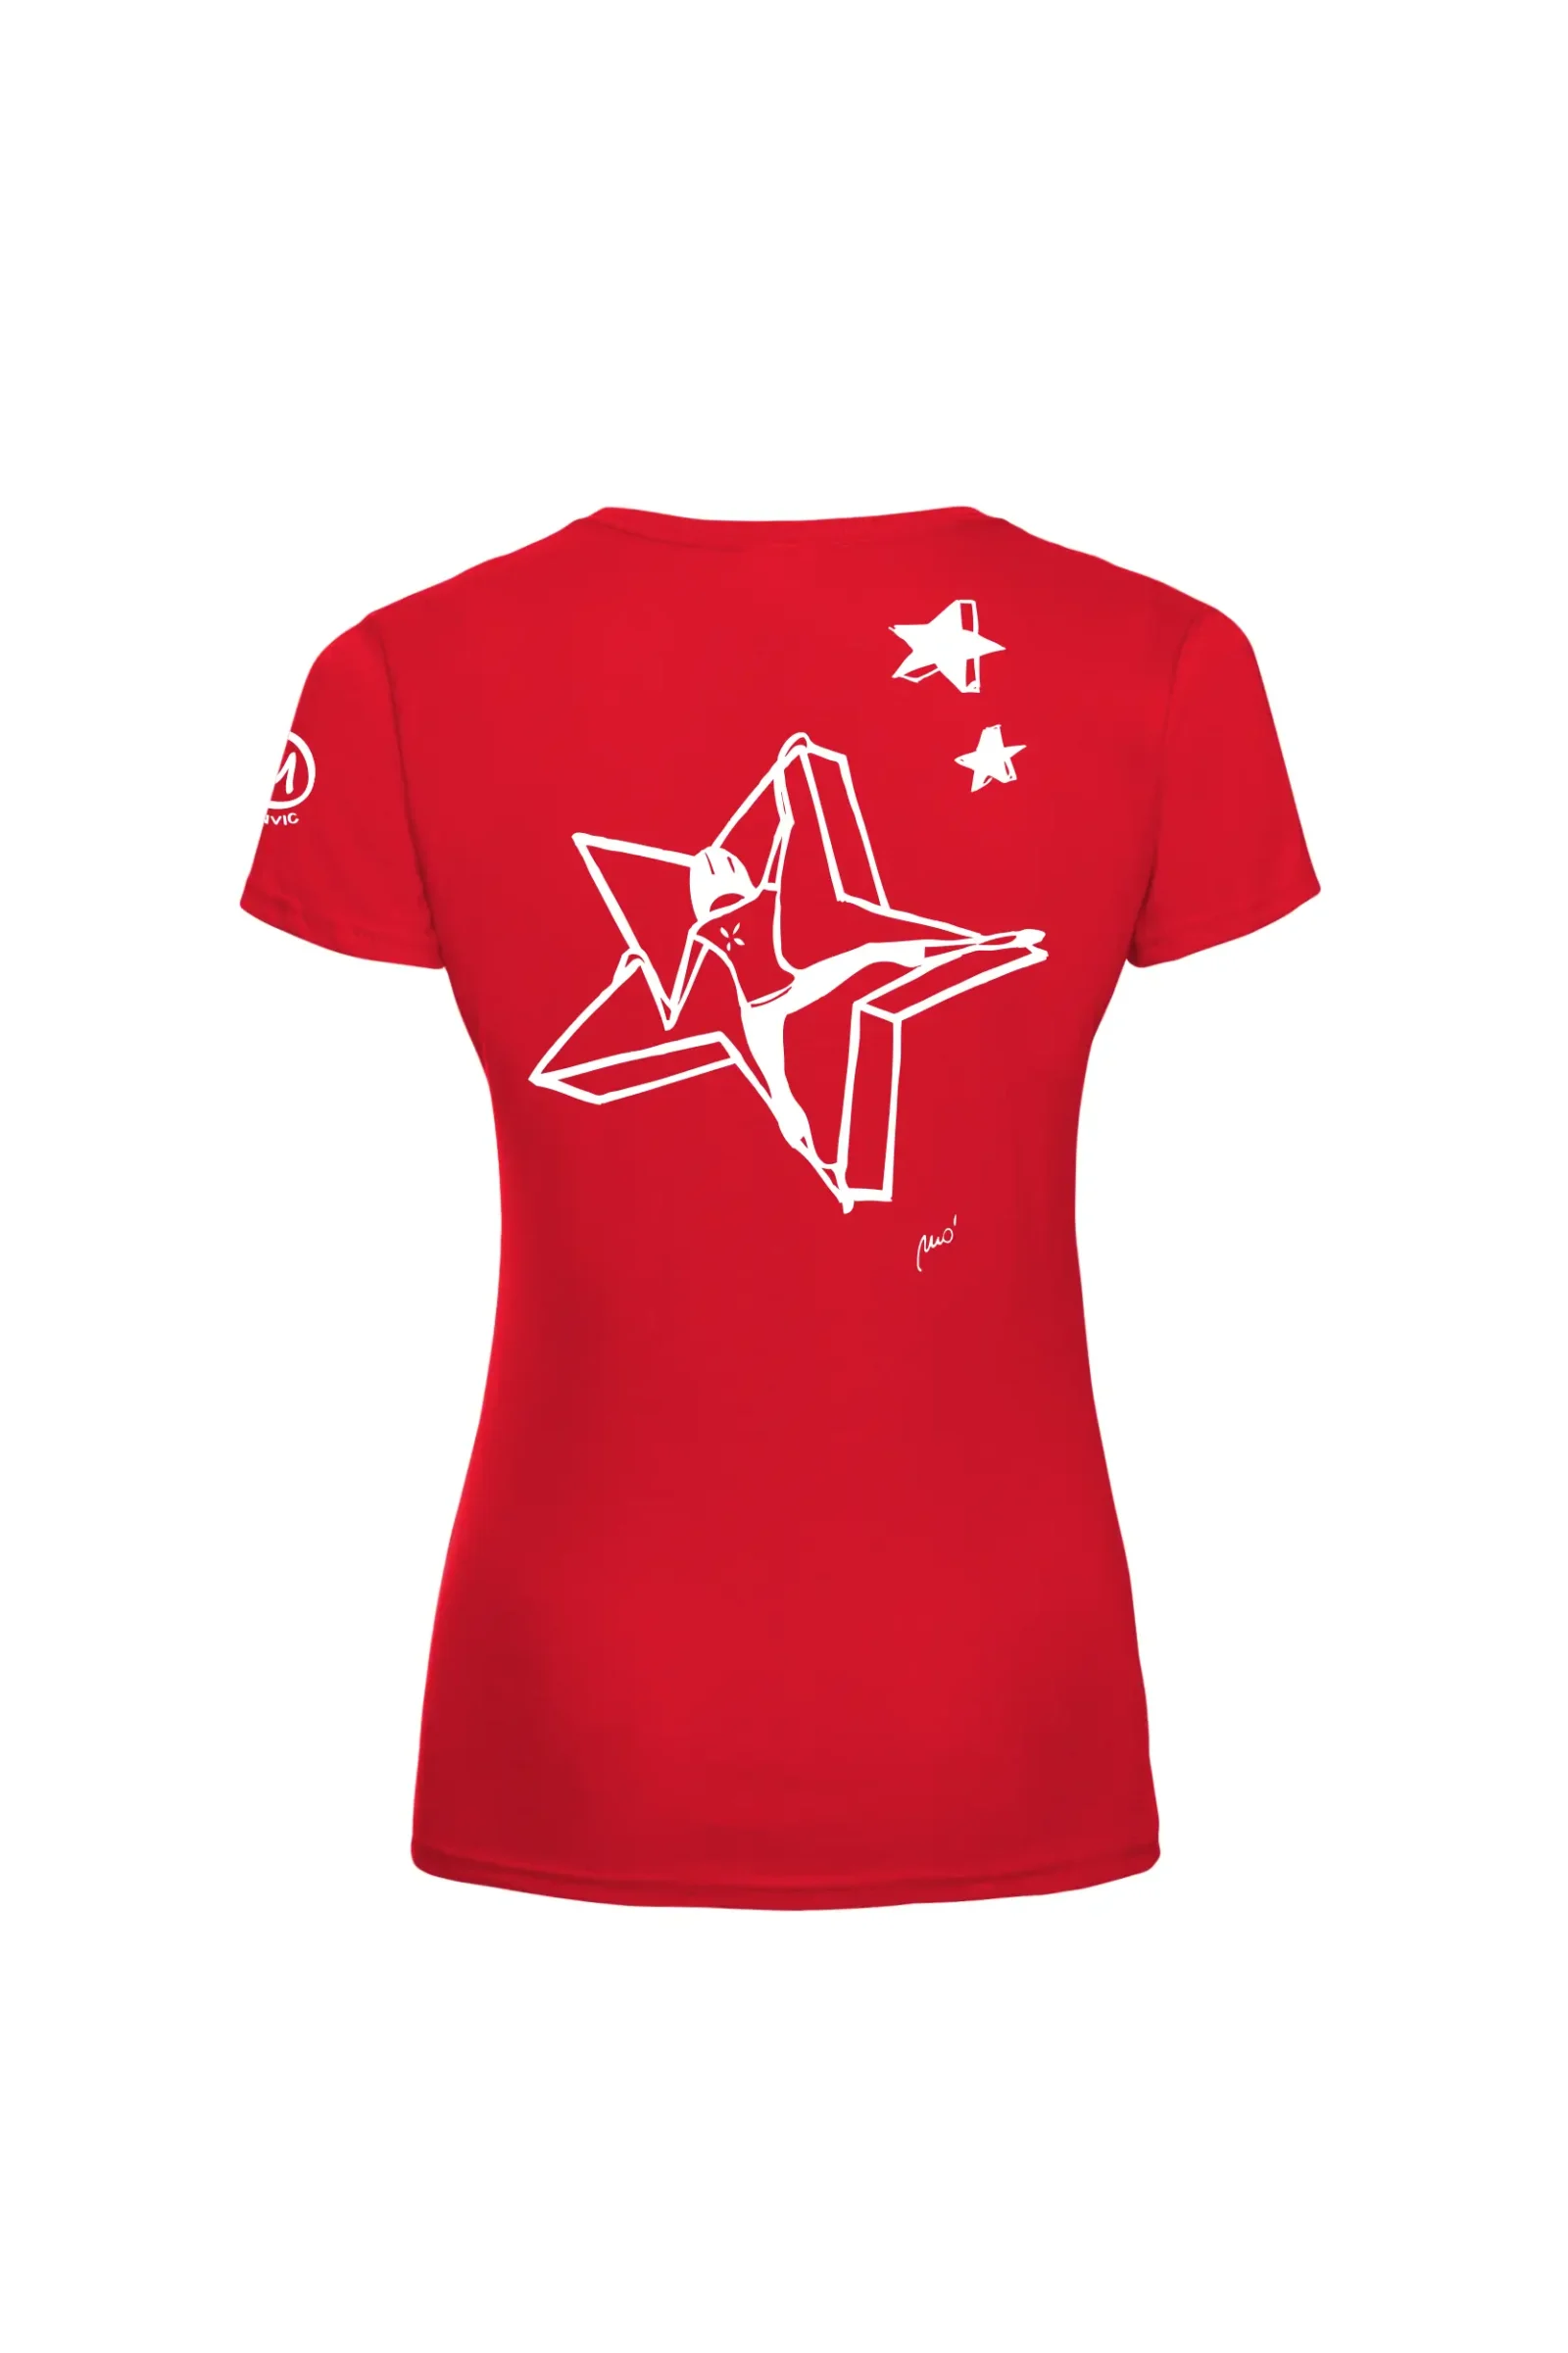 Women's climbing t-shirt - red cotton - "Azi" SHARON by MONVIC